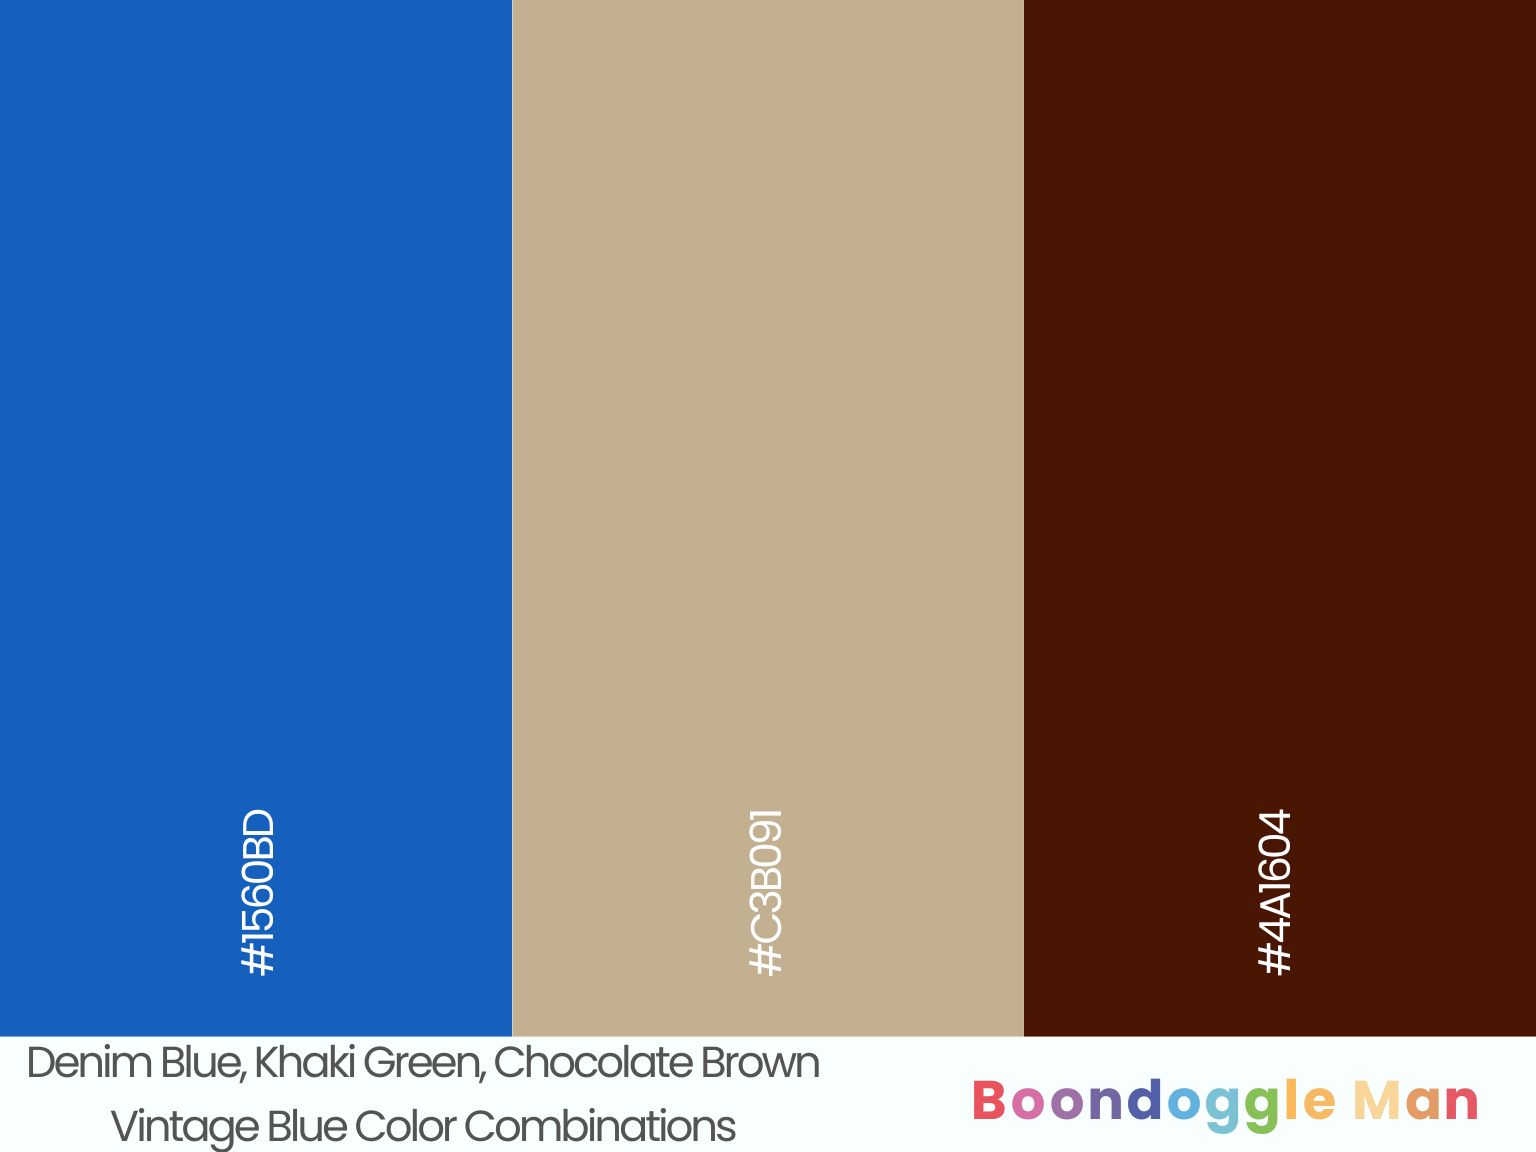 Denim Blue, Khaki Green, Chocolate Brown